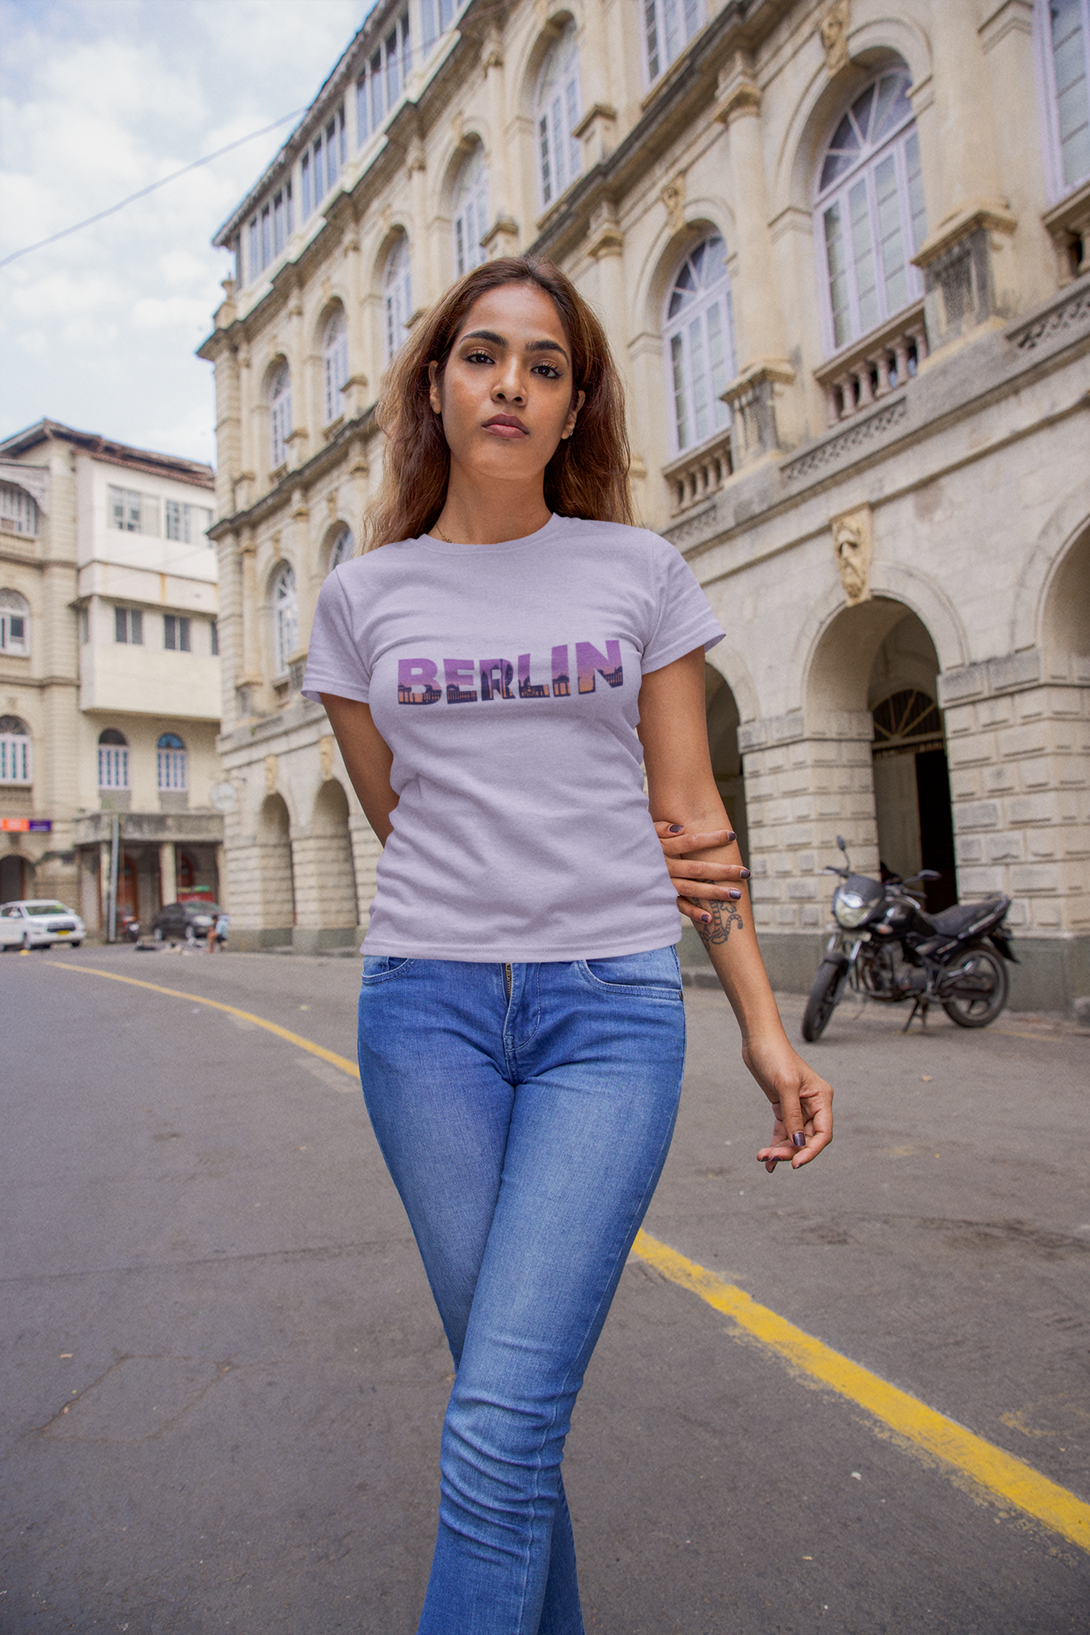 Berlin Skyline Printed T-Shirt For Women - WowWaves - 2